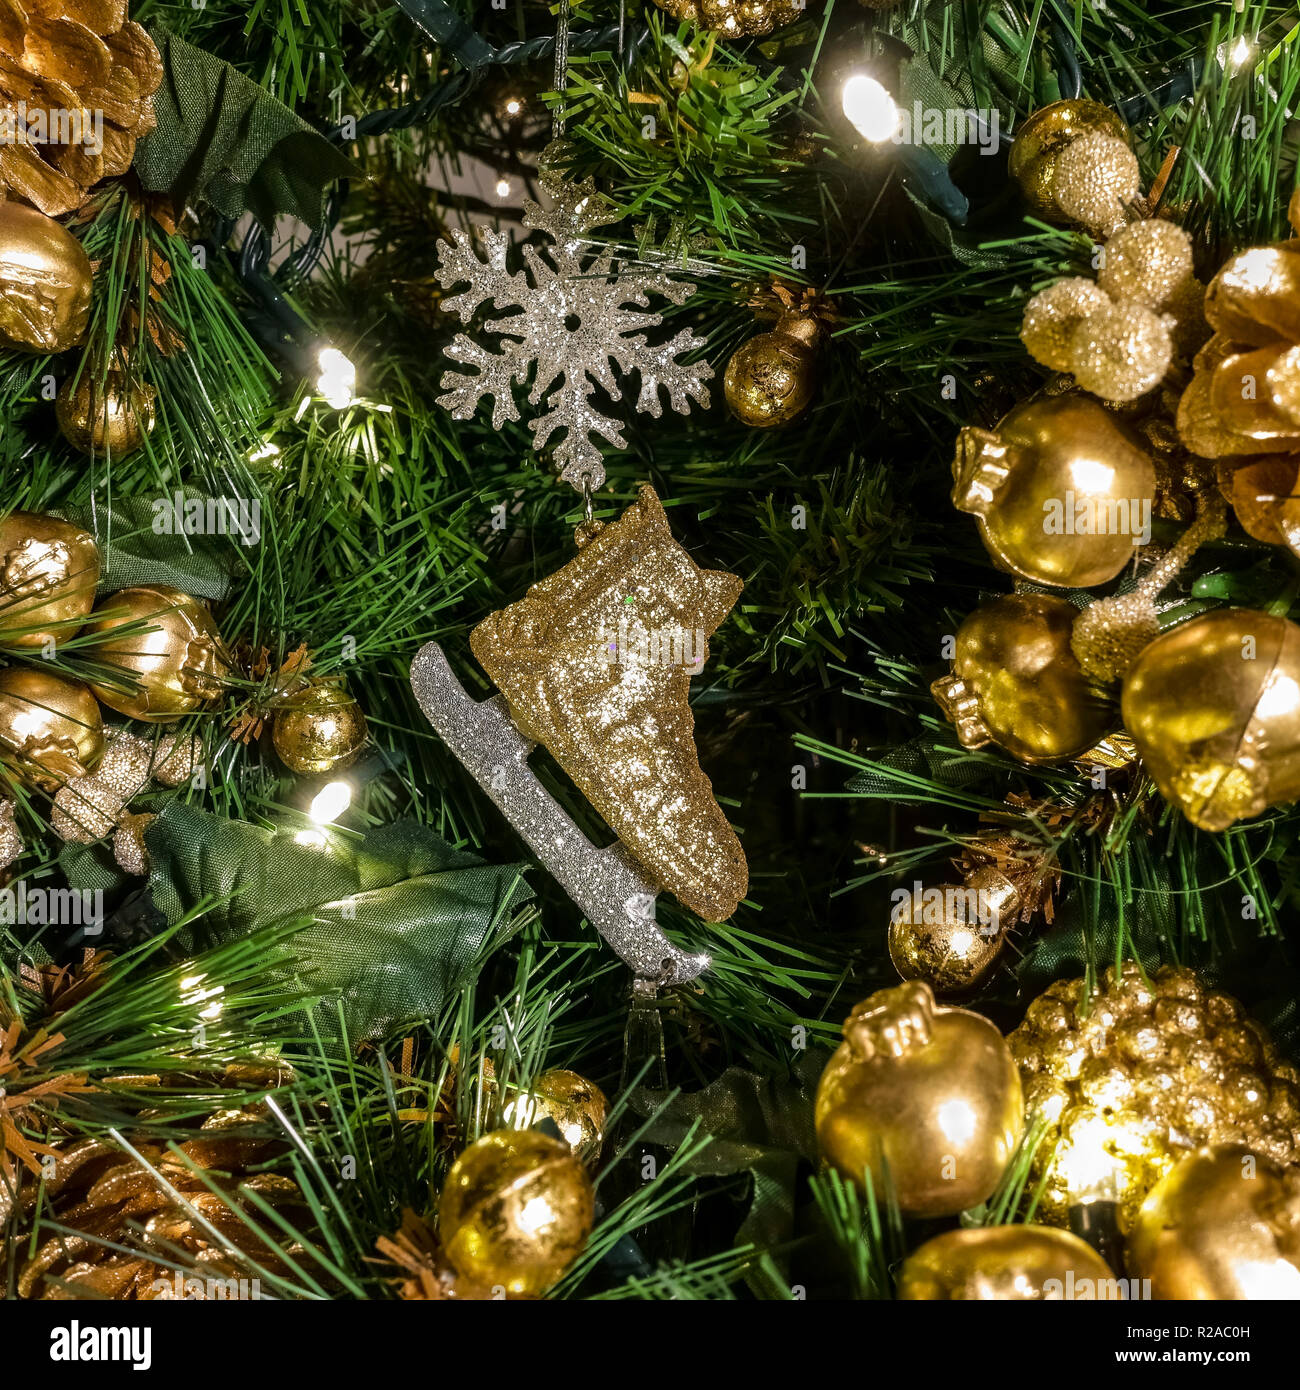 Golden Christmas tree decoration. Christmas time festive mood atmosphere. Seasonal image. Stock Photo